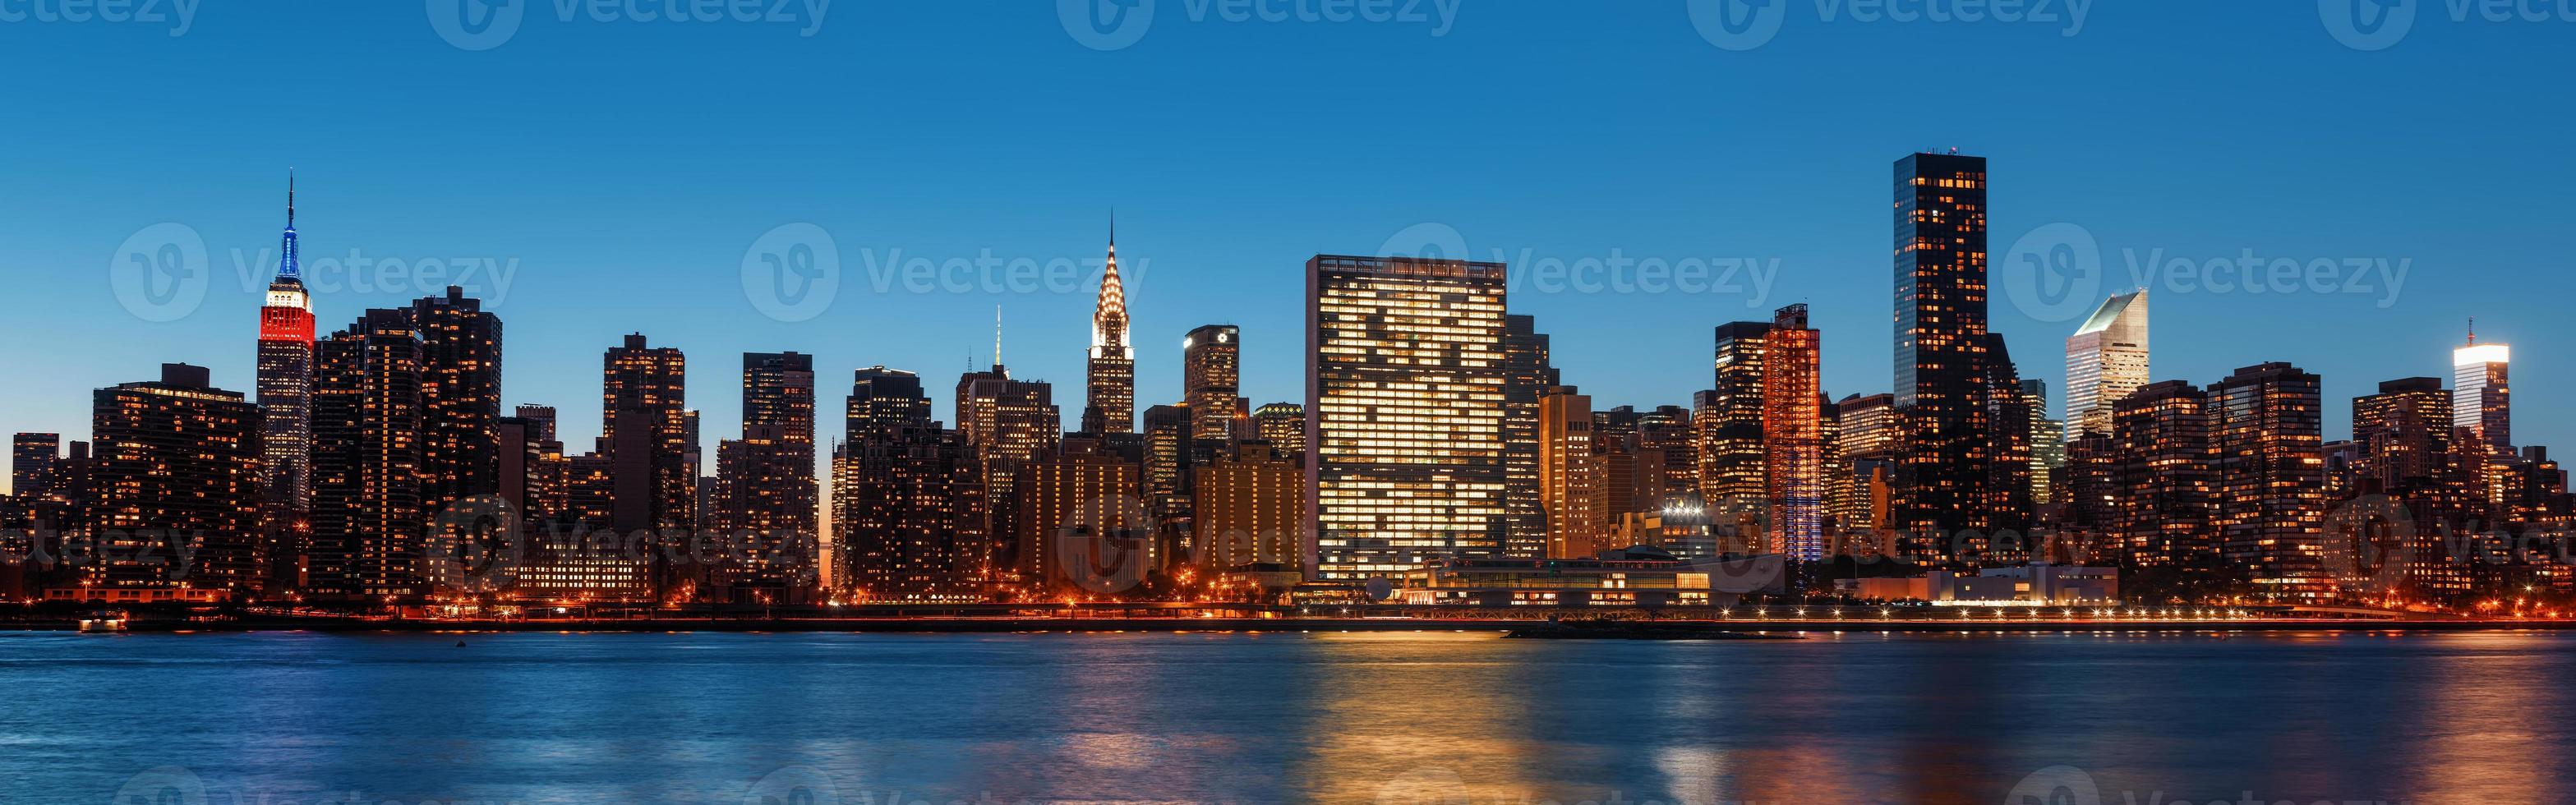 sent kväll ny york stad horisont panorama foto